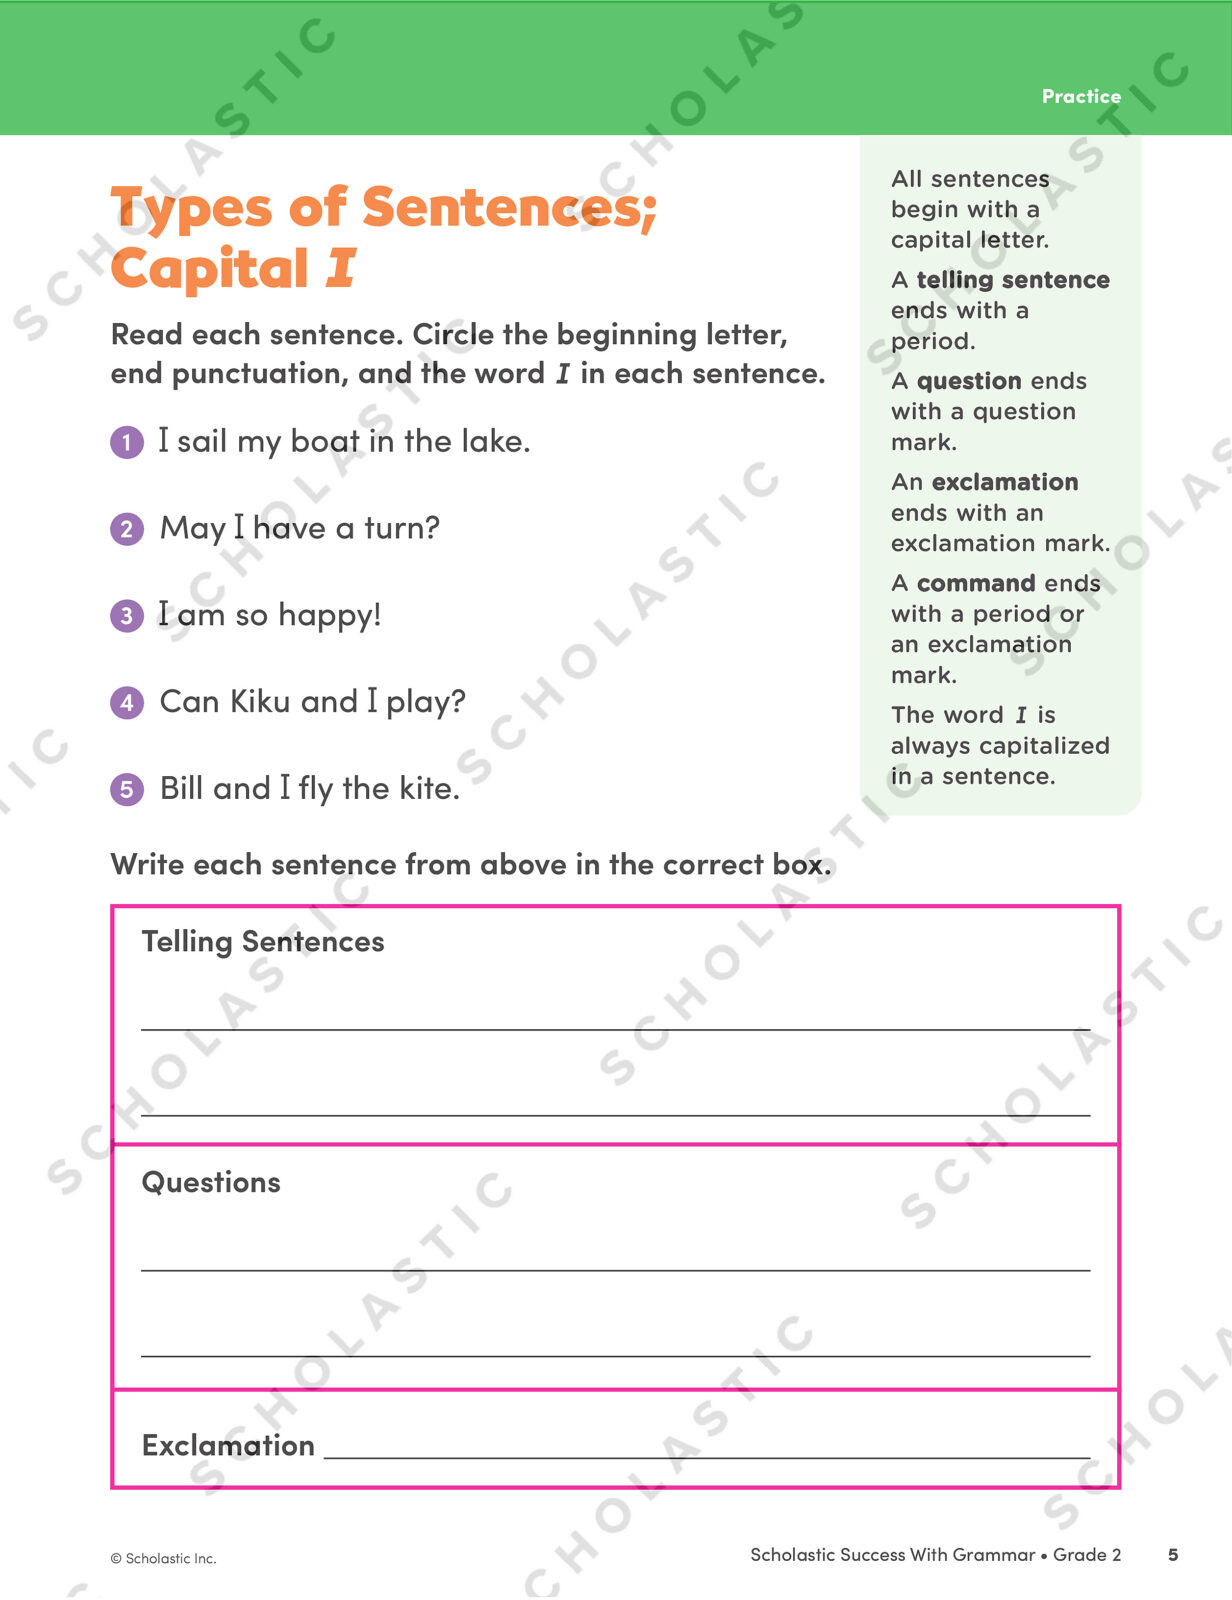 Scholastic Success With Grammar: Grade 2 Workbook | The Scholastic